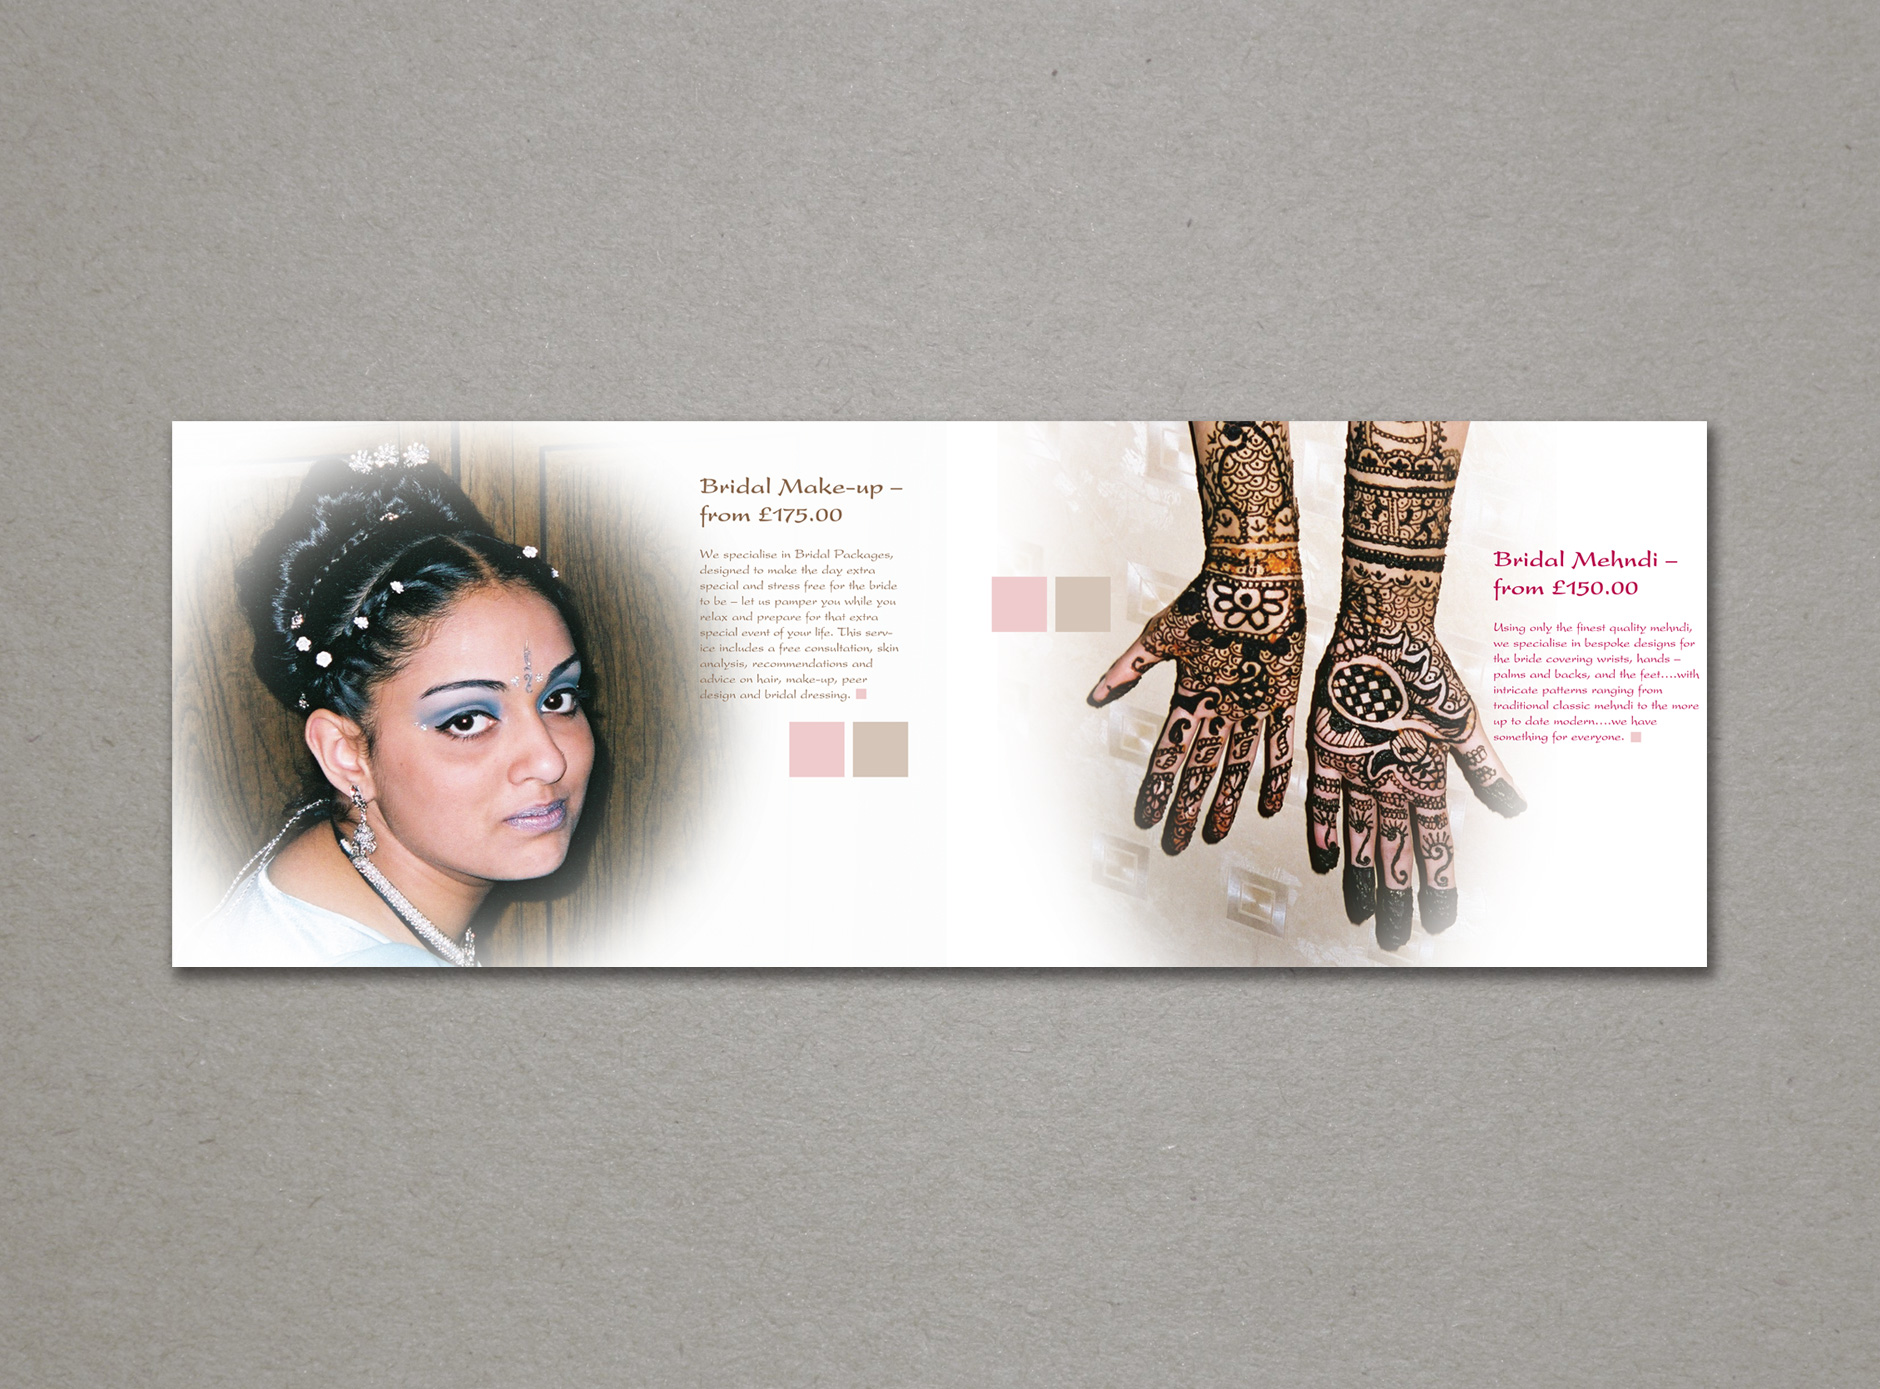 OM Bridal & Beauty design for print